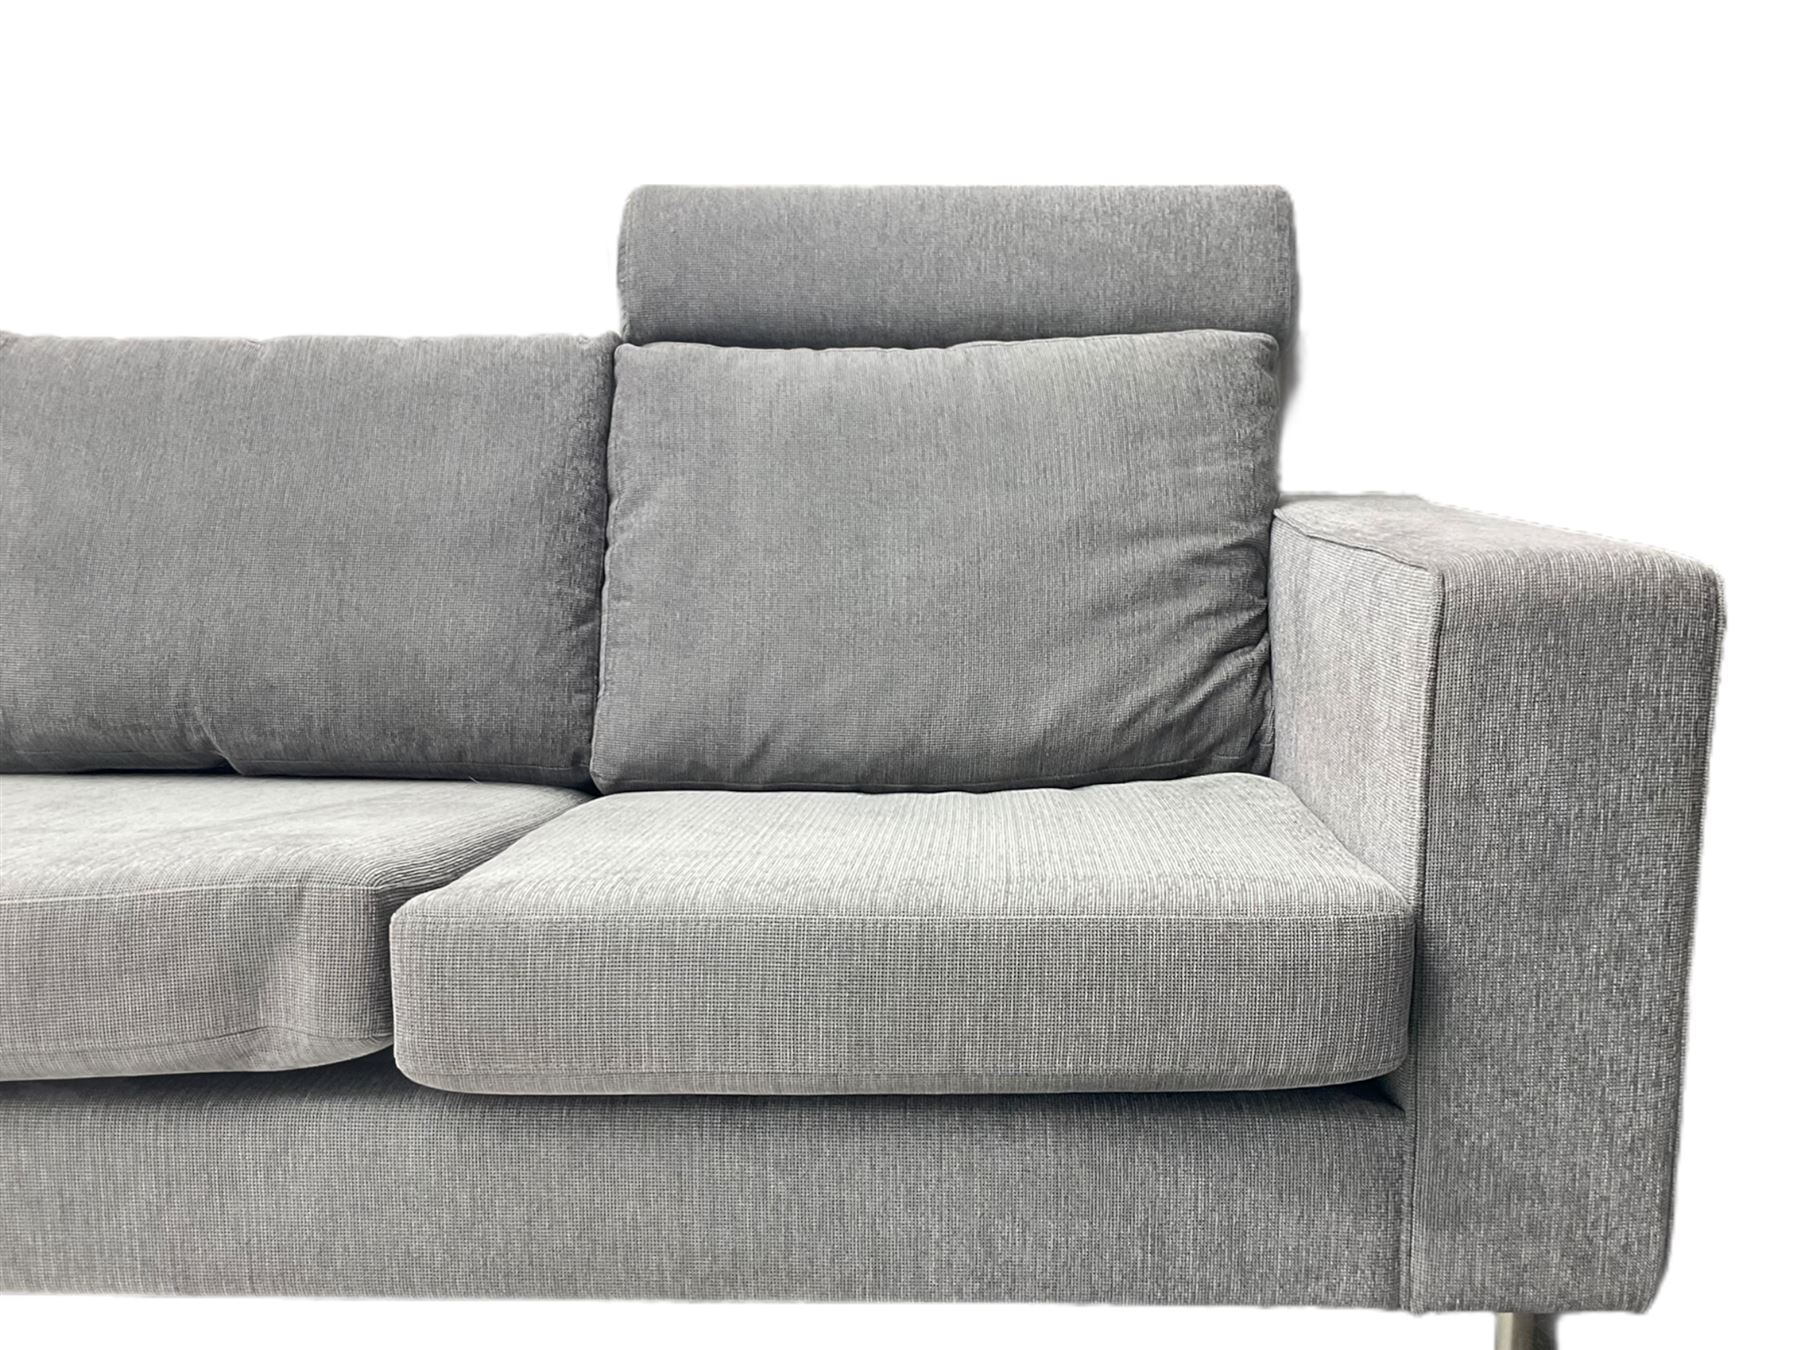 BoConcept 'Indivi 2' corner lounge sofa in grey Matera fabric - Image 6 of 8